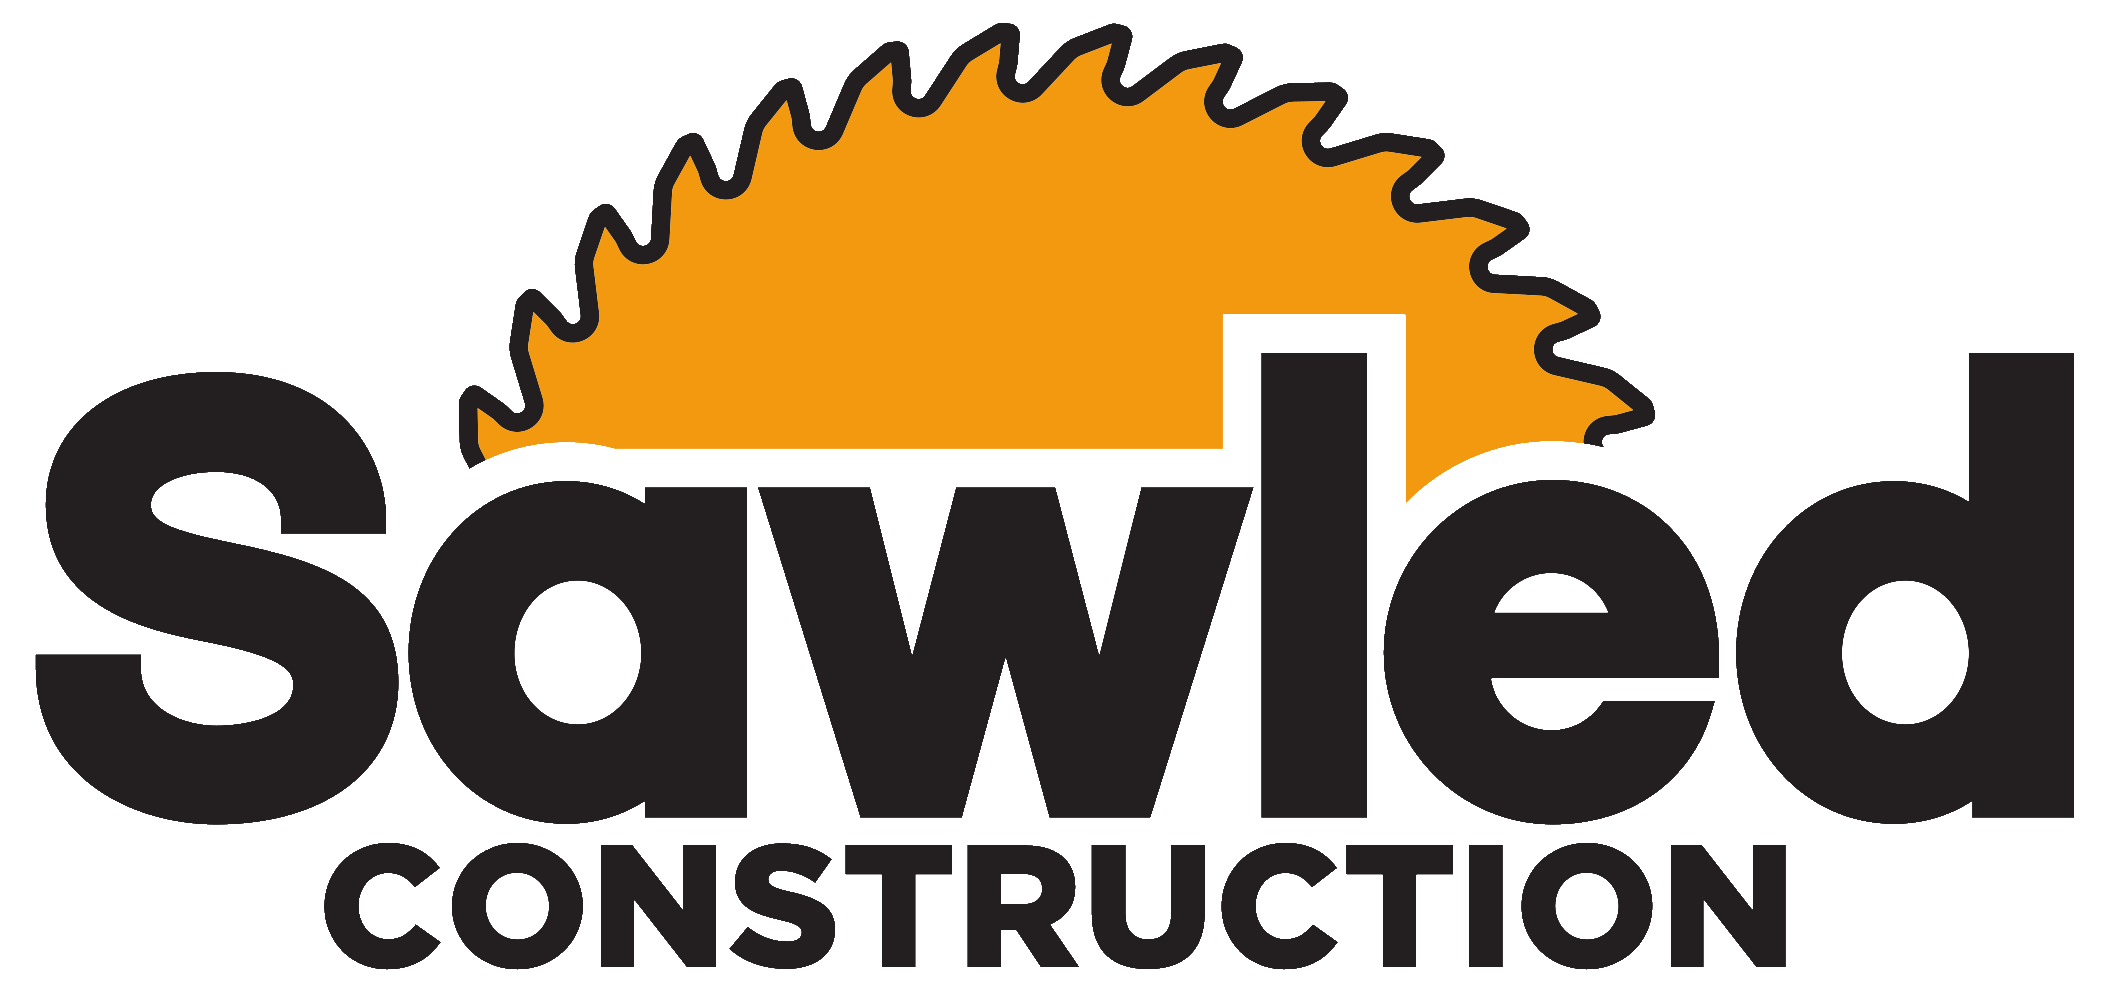 Sawled Construction